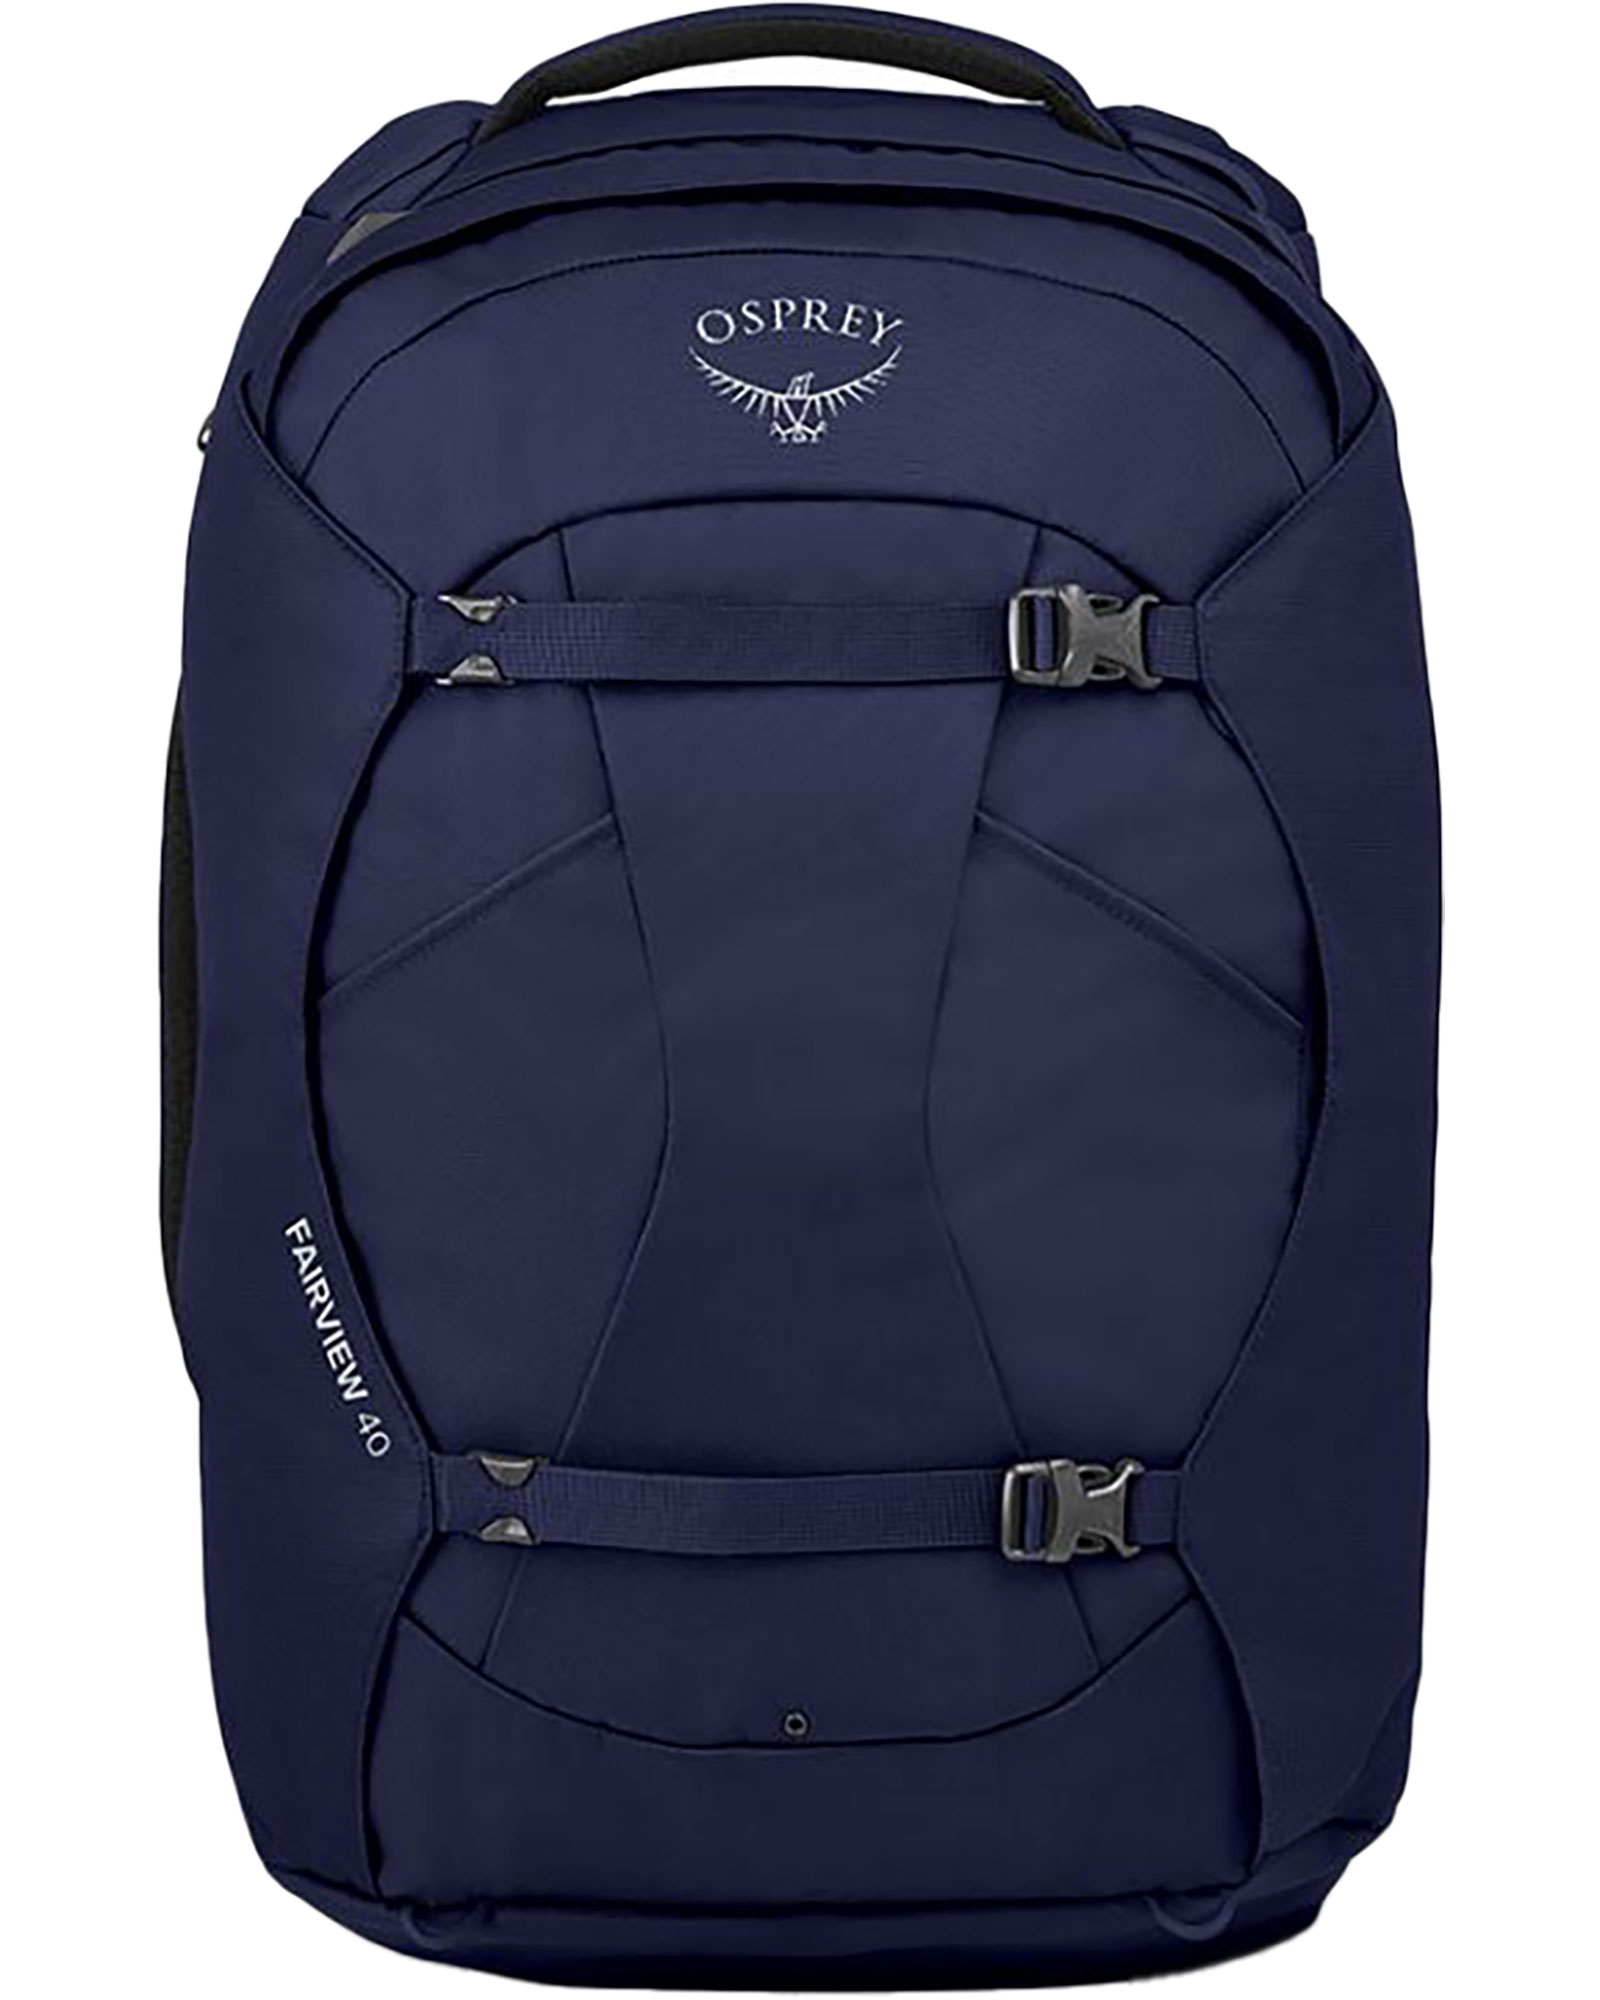 Osprey Fairview 40 Women’s Backpack - Winter Night Blue